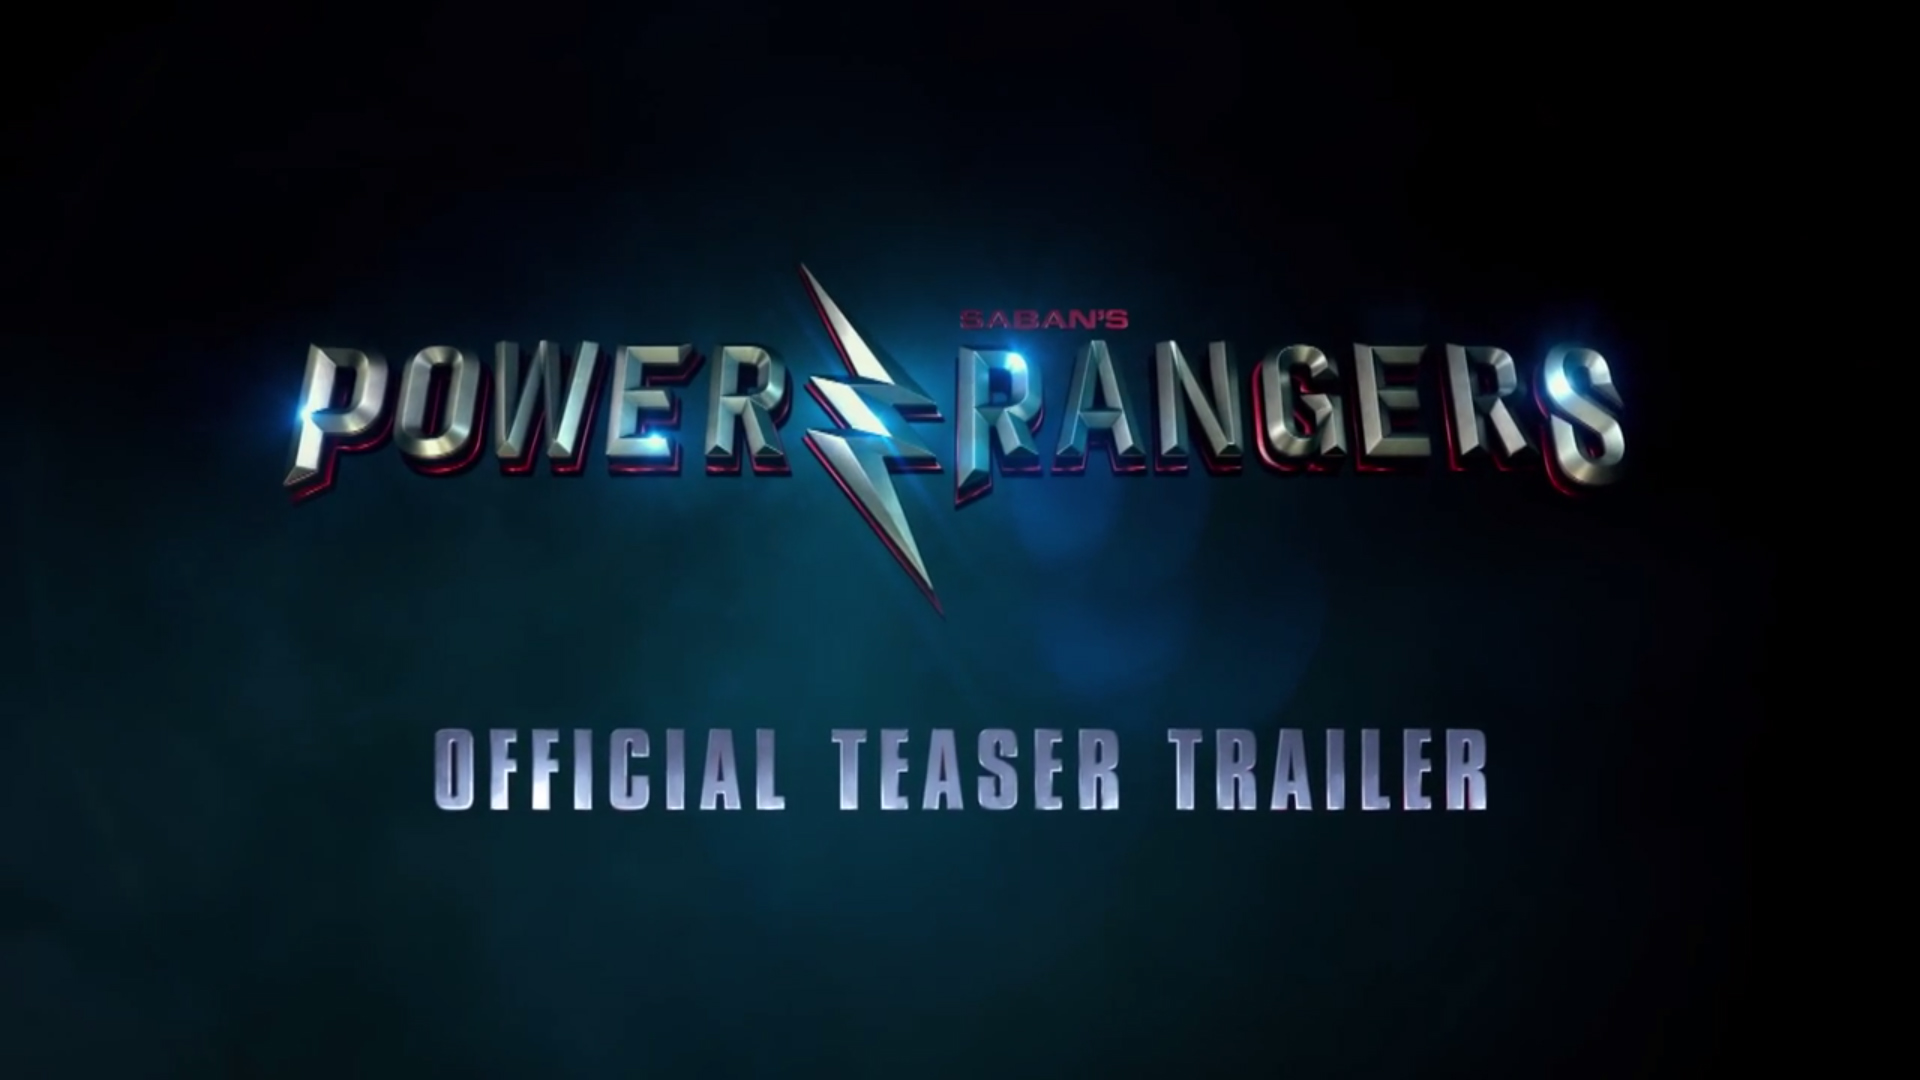 Film Watch Power Rangers Full-Length 2017